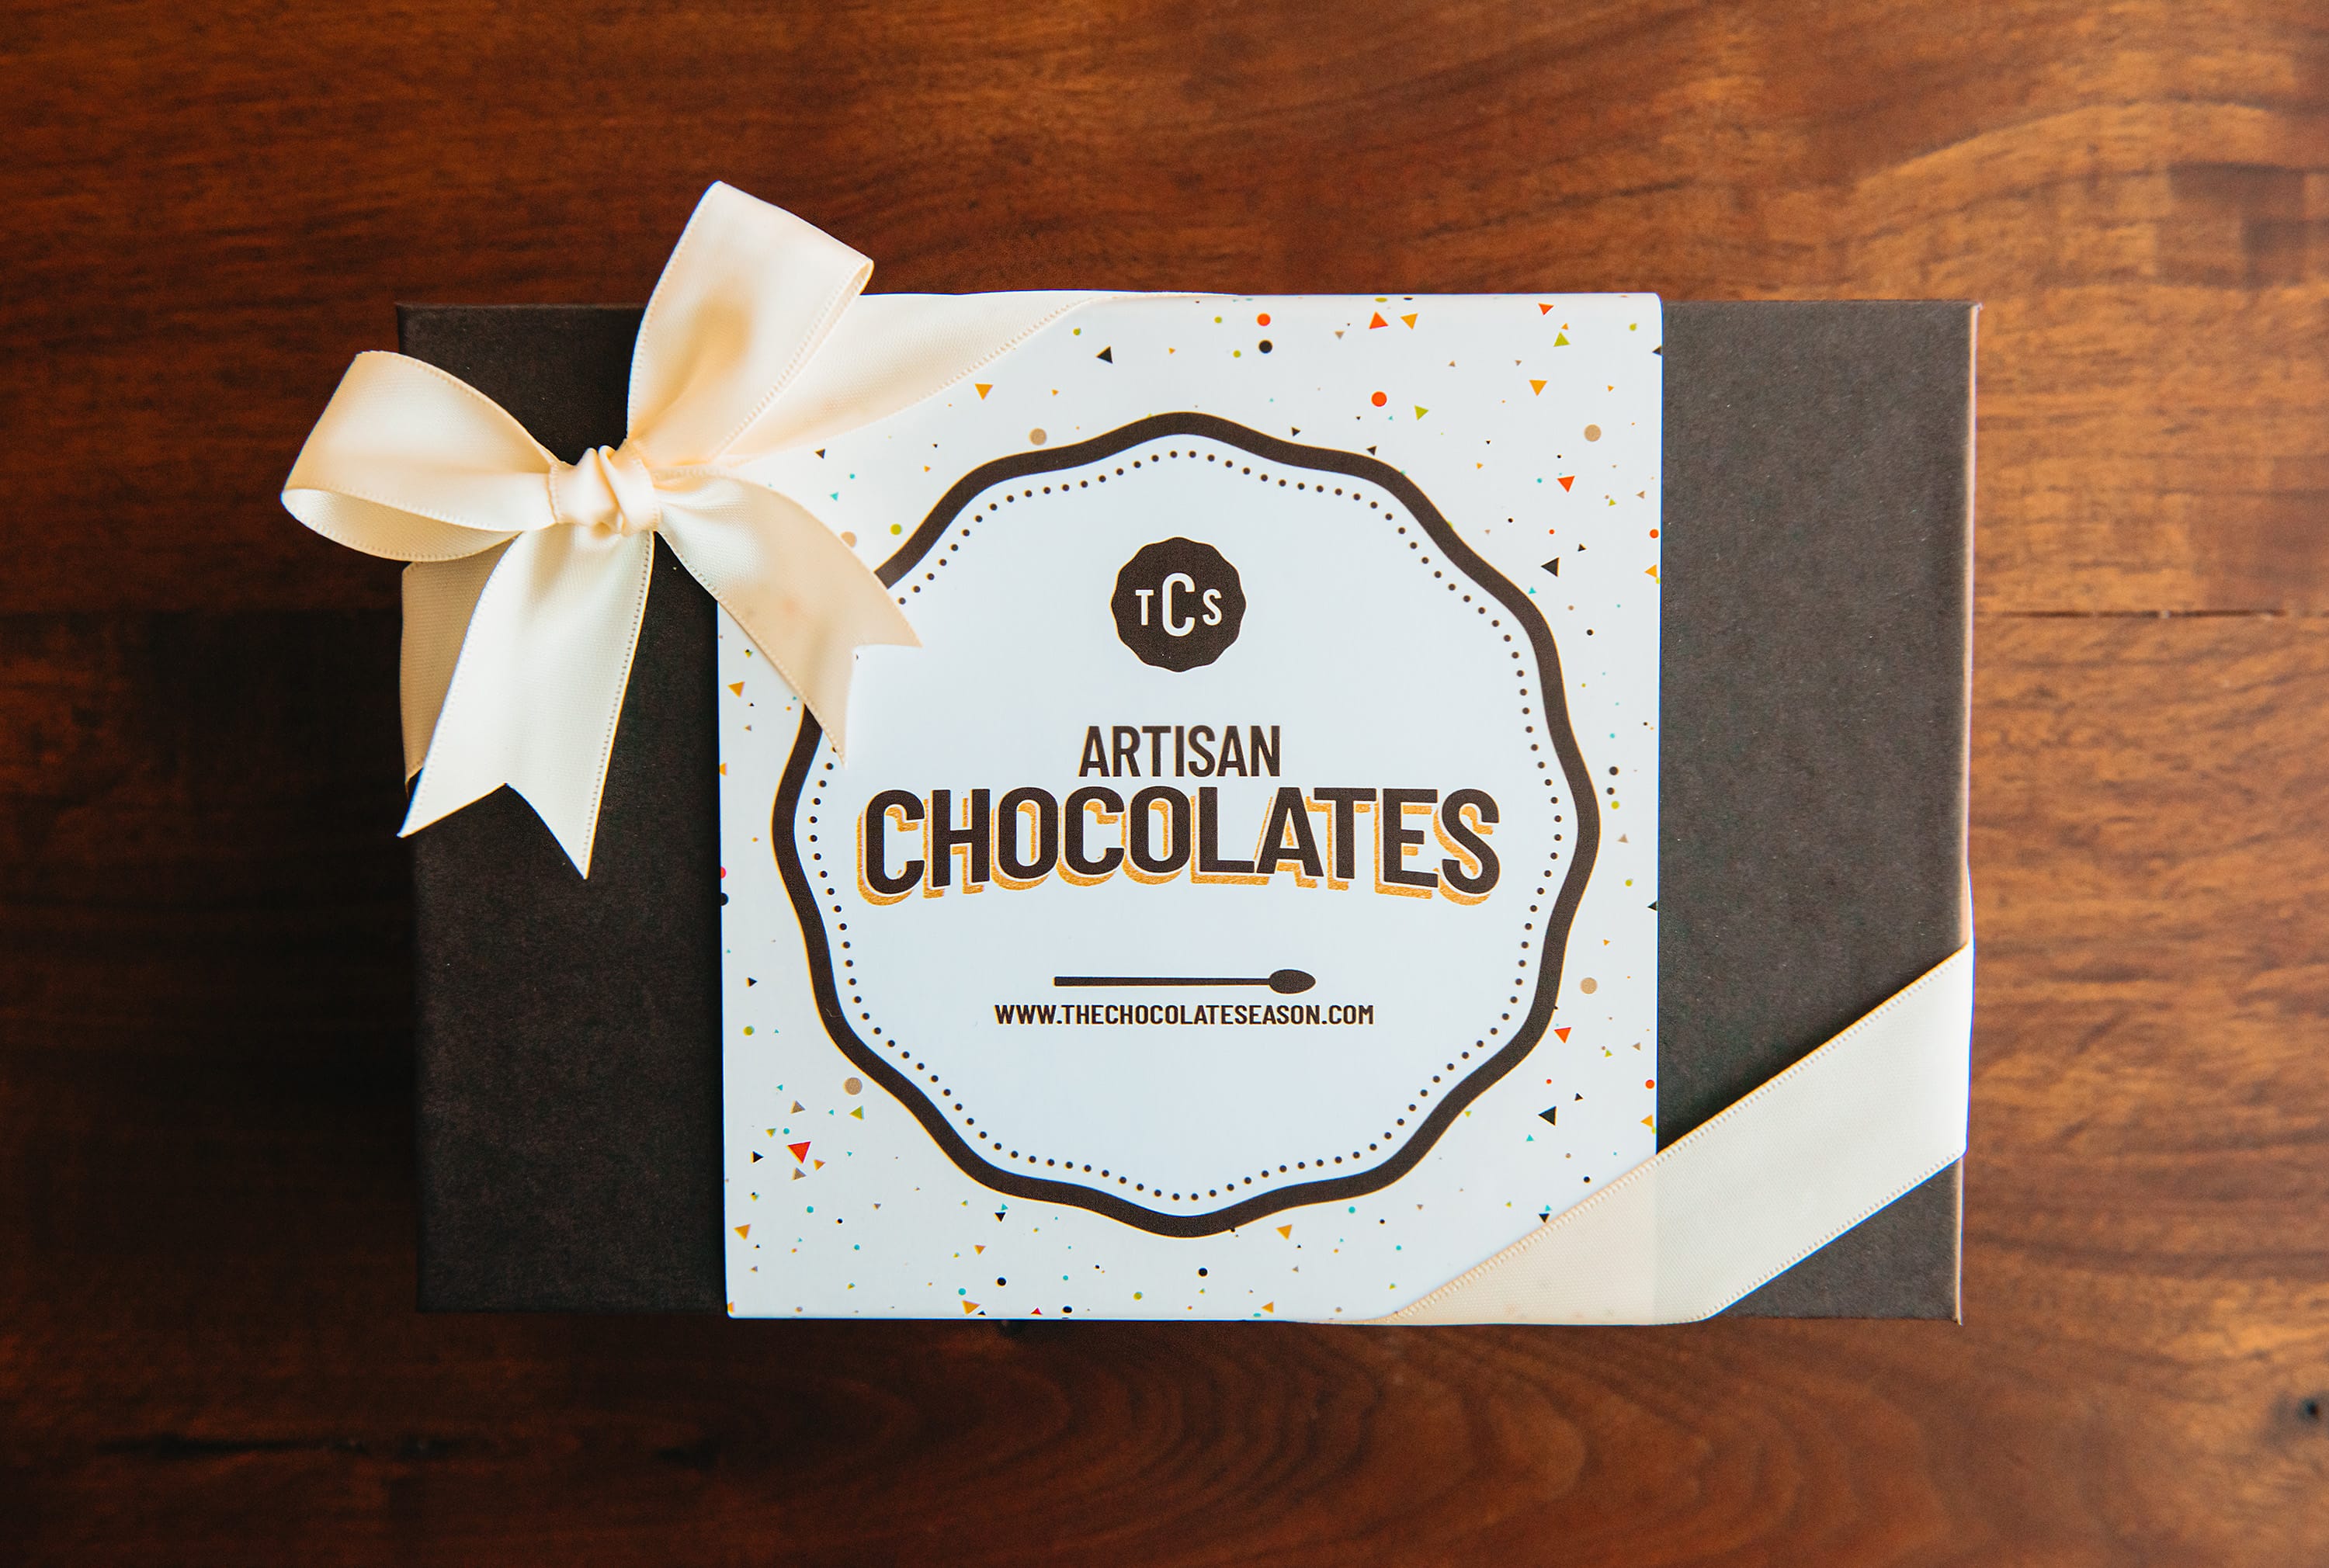 Valrhona 15 Piece Bonbons Chocolate Gift Box (Dark) – Bar & Cocoa